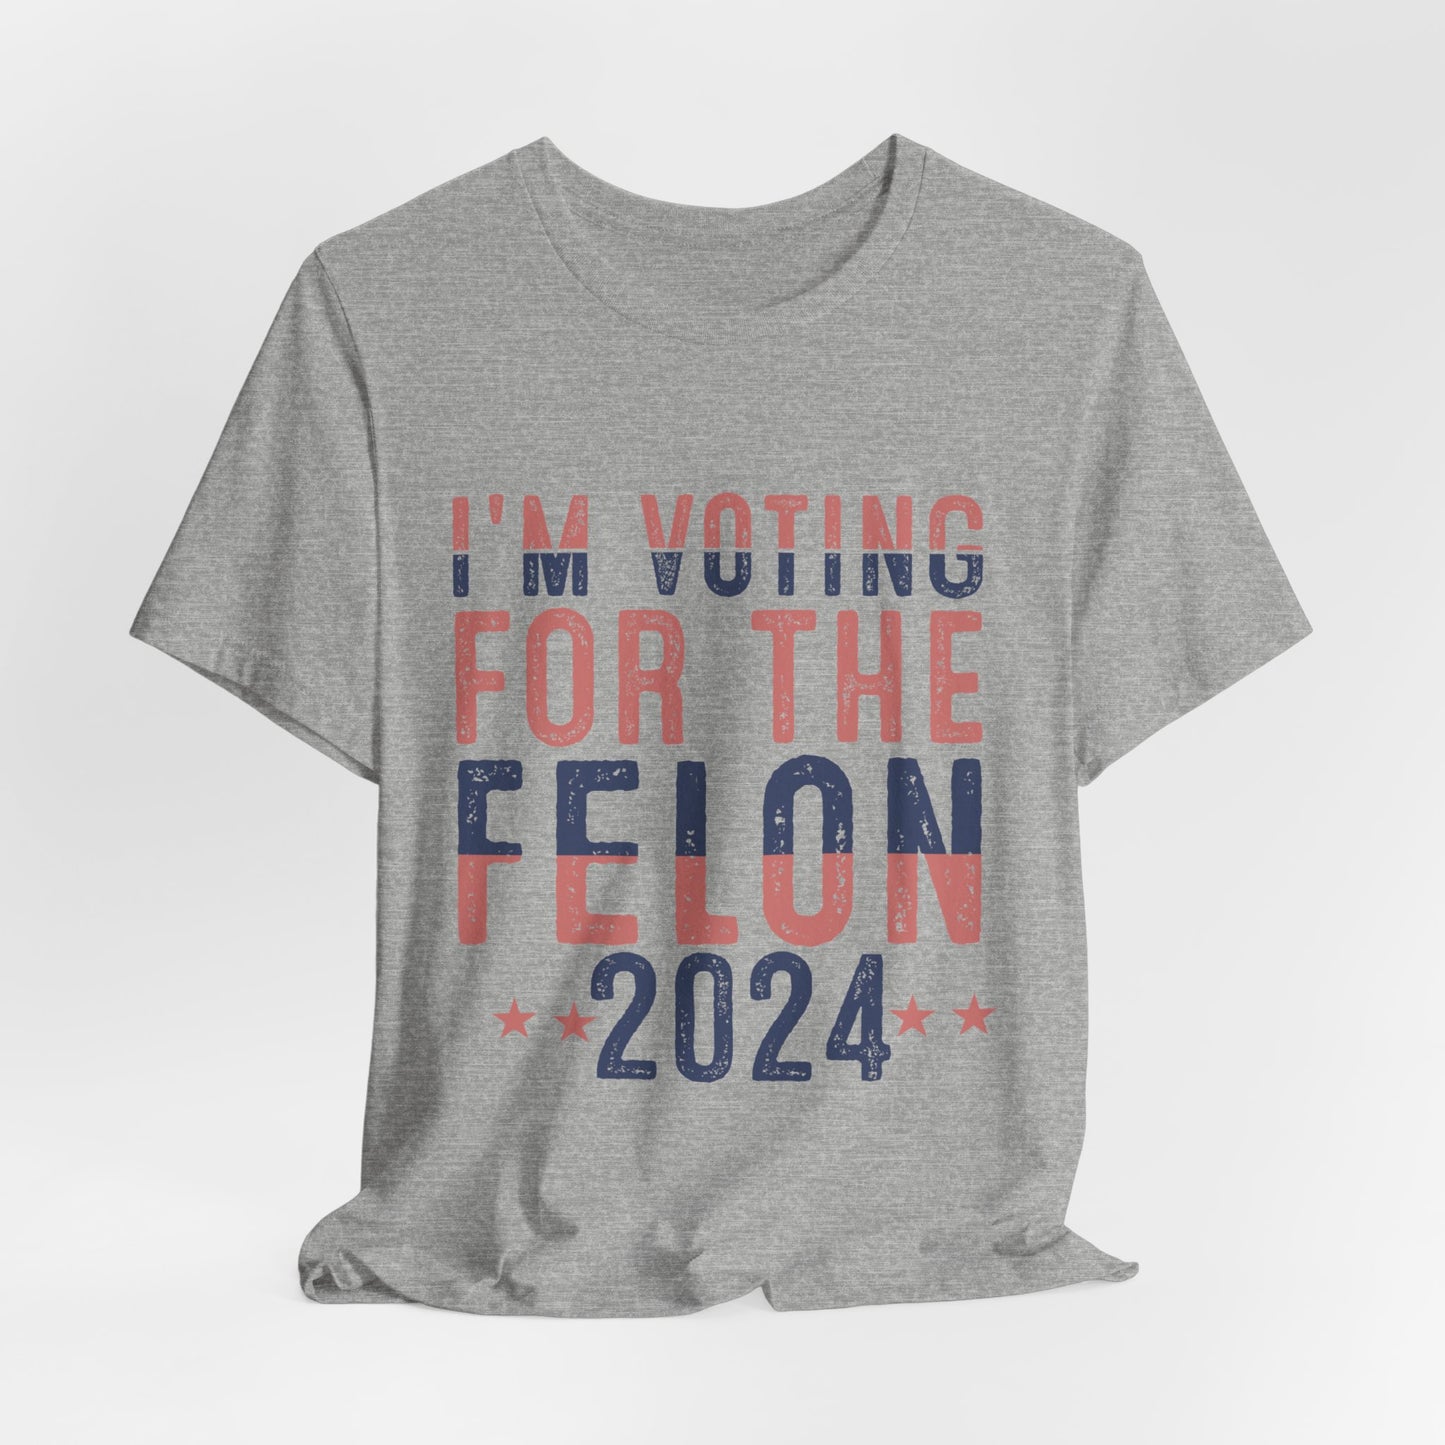 Voting for the Felon Trump President Election Women's Adult Short Sleeve Tee